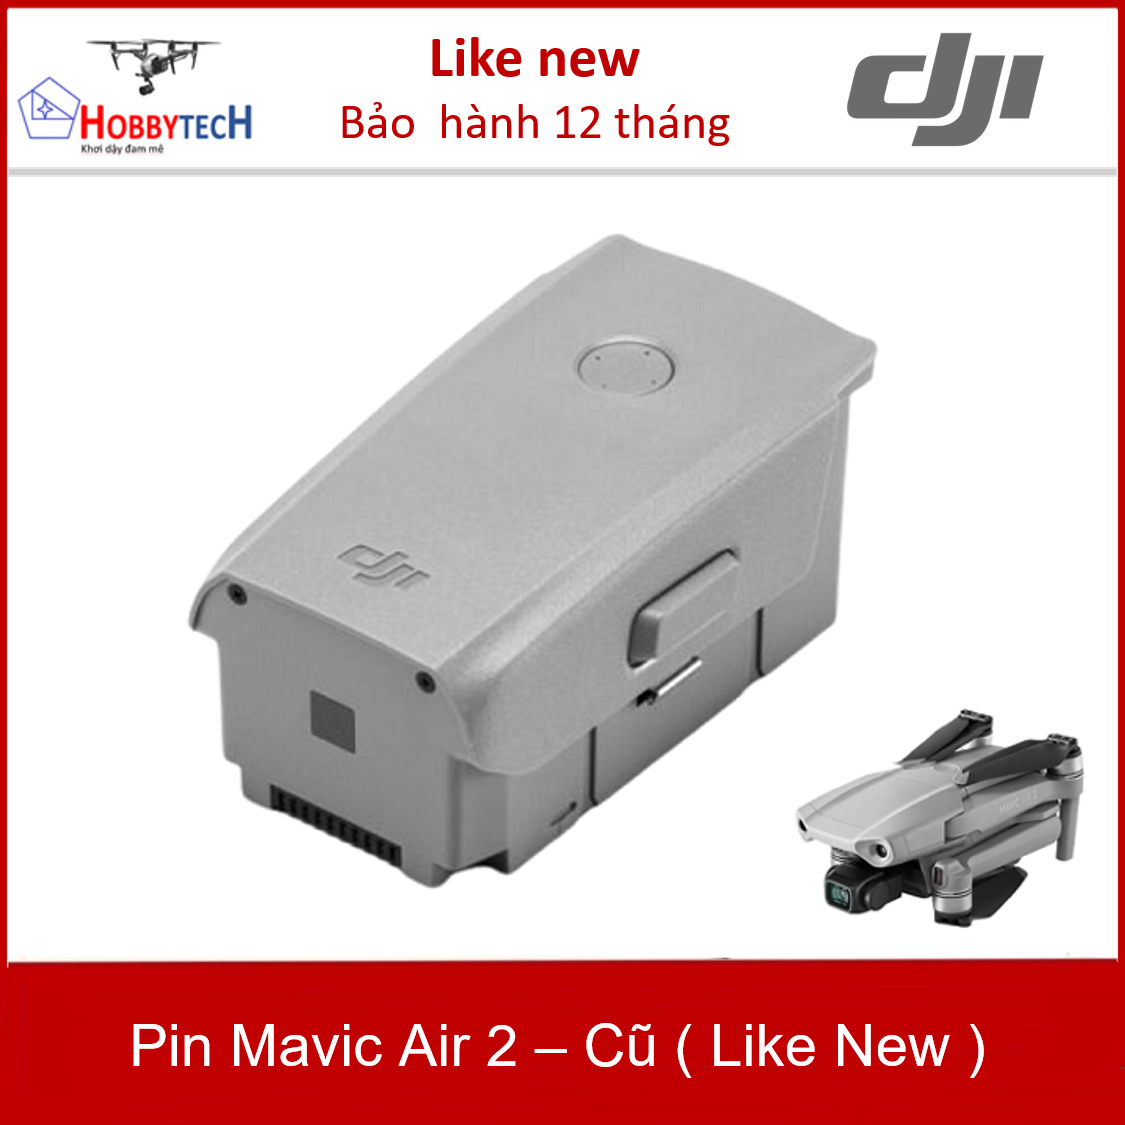 Pin Mavic Air 2 – Cũ ( Like New )